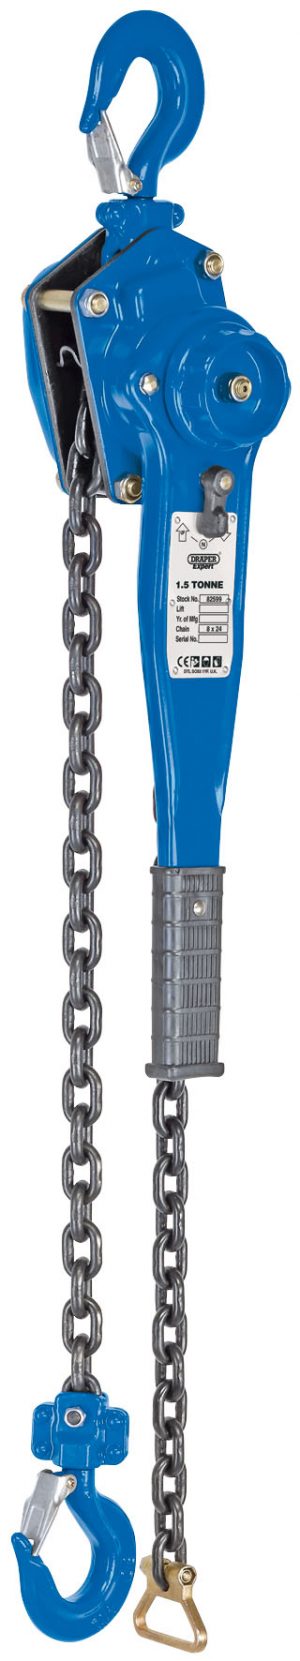 Chain Lever Hoist (1.5 Tonne)